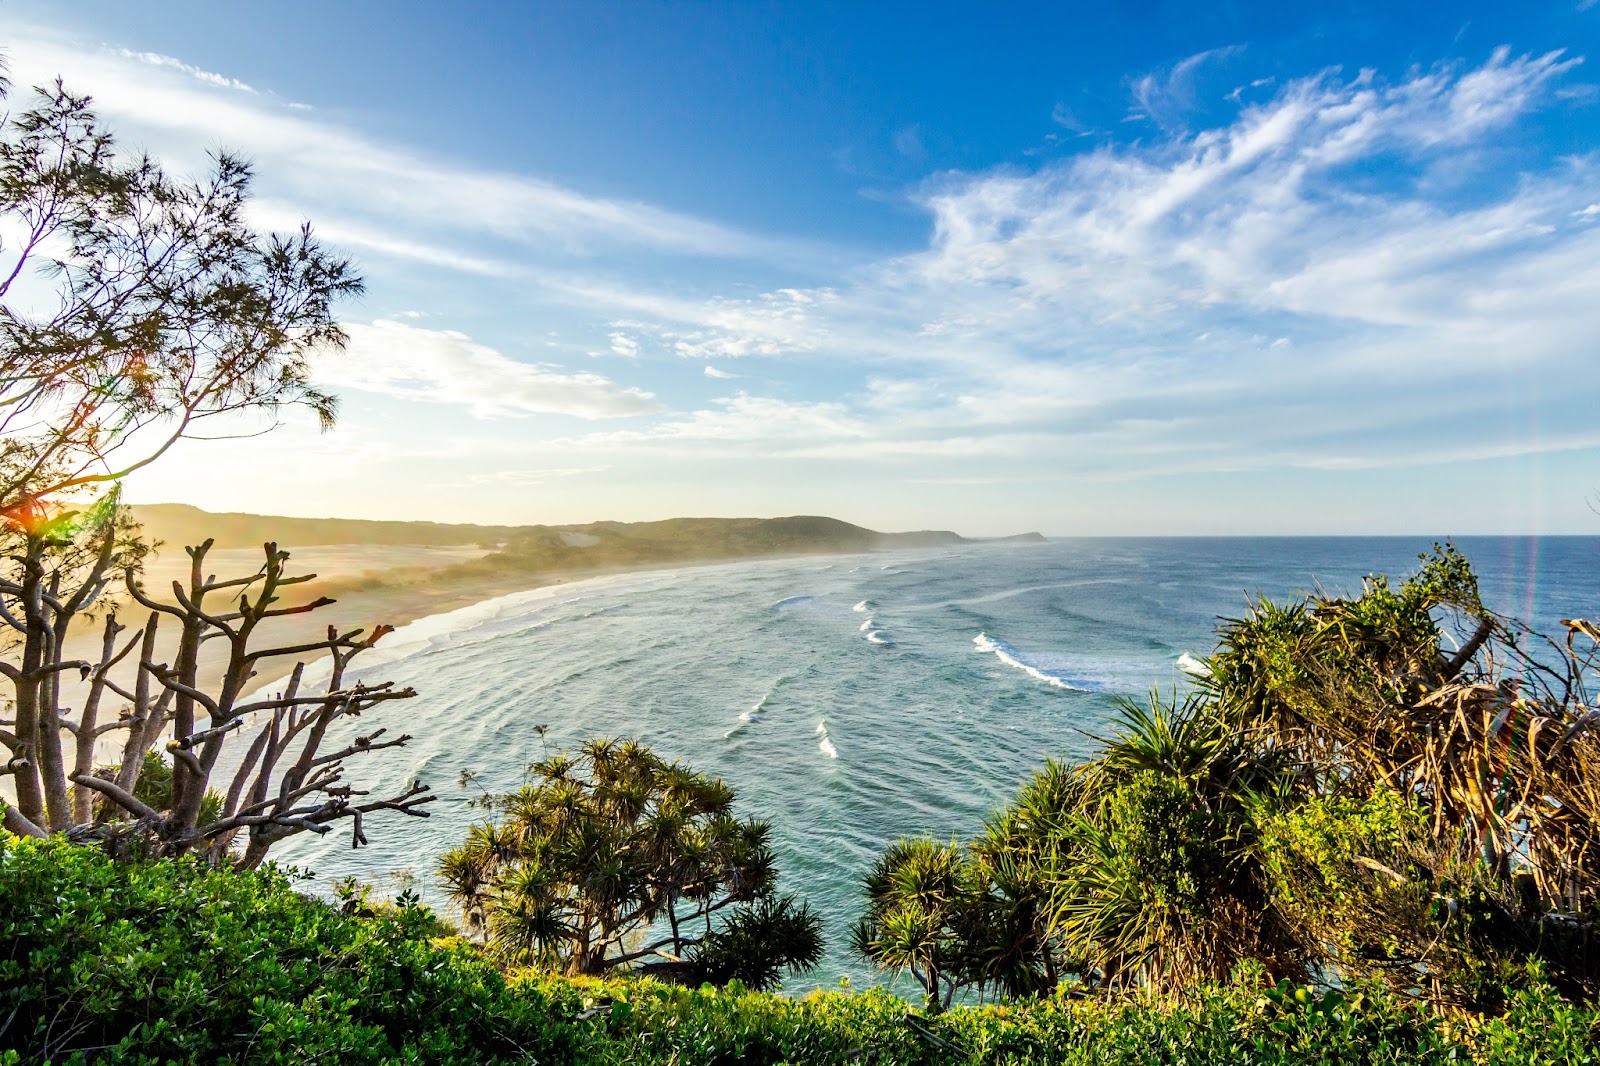 A beautiful view of Australia's breathtaking islands.